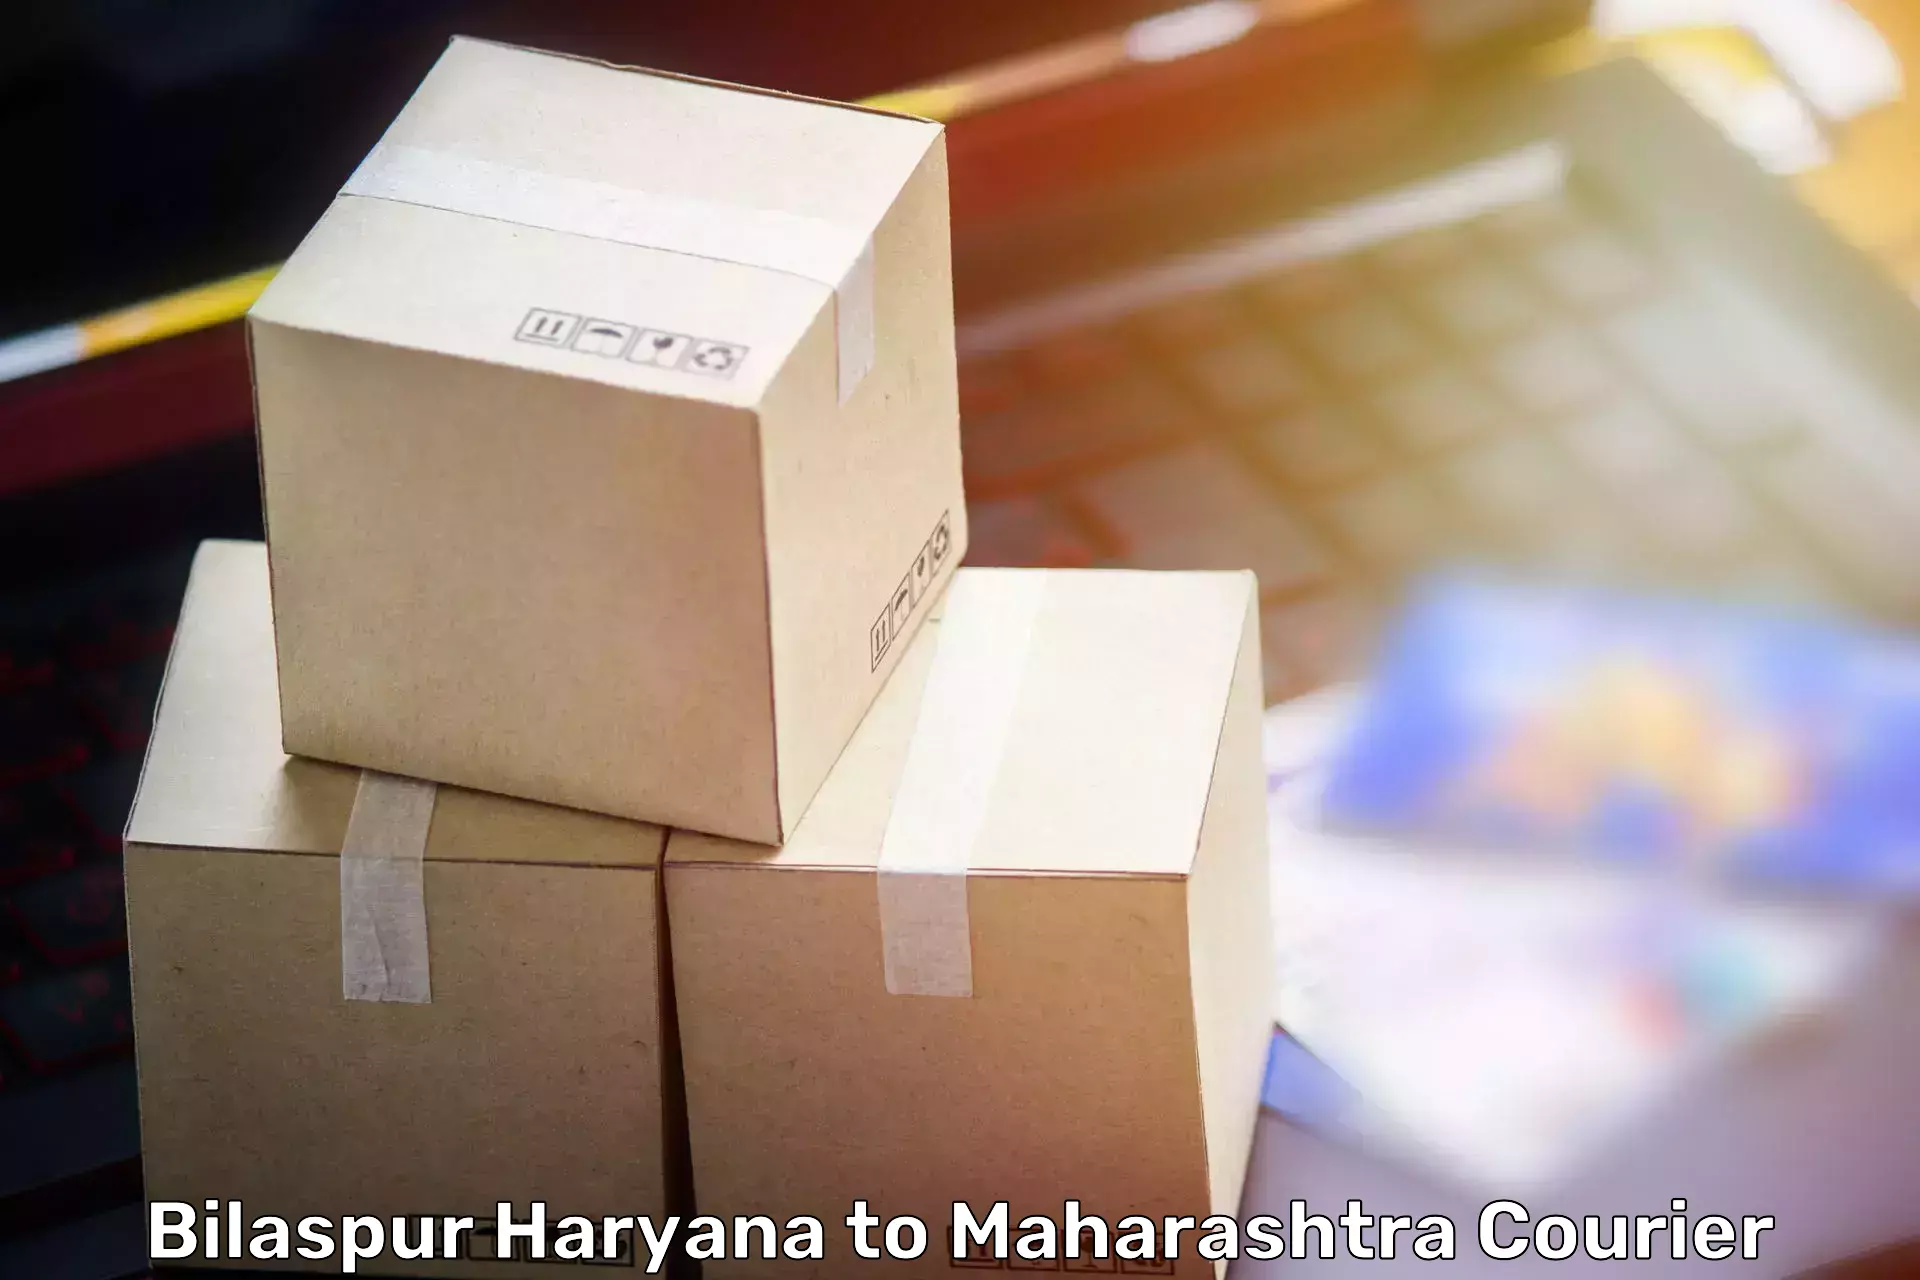 Budget-friendly movers Bilaspur Haryana to Gadchiroli